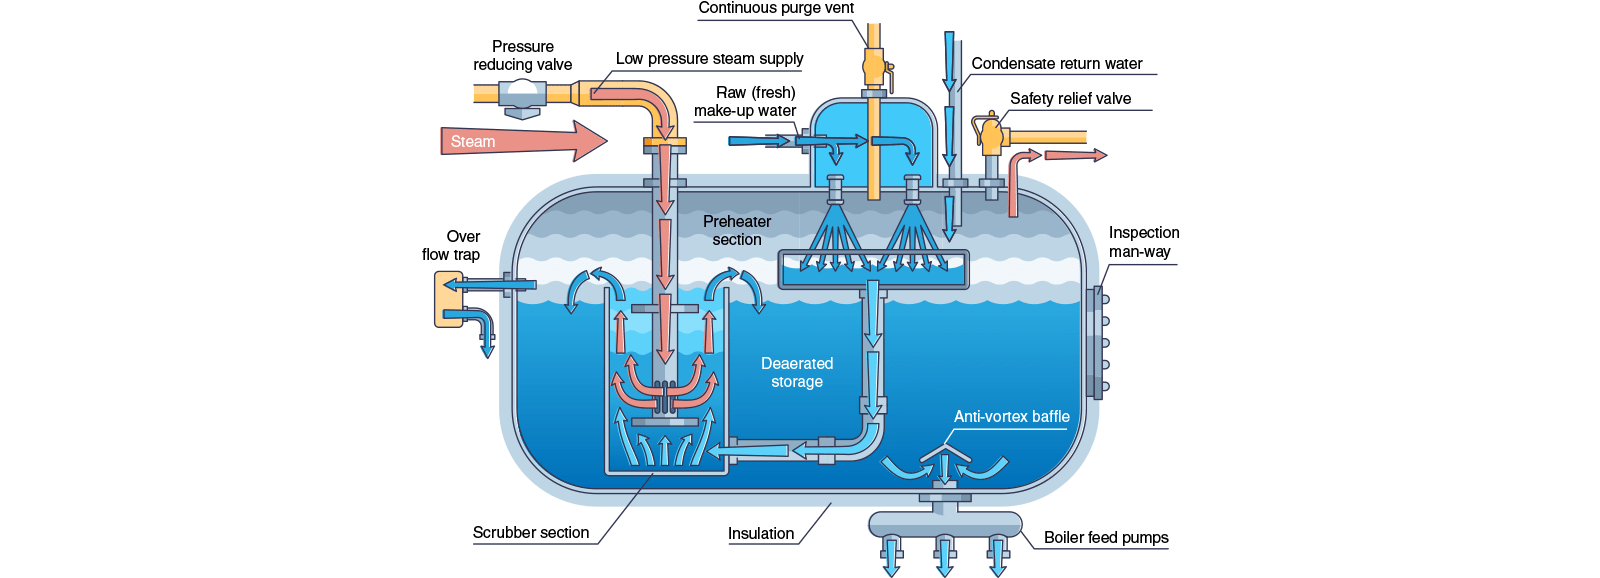 How an industrial steam boiler works - Diagram